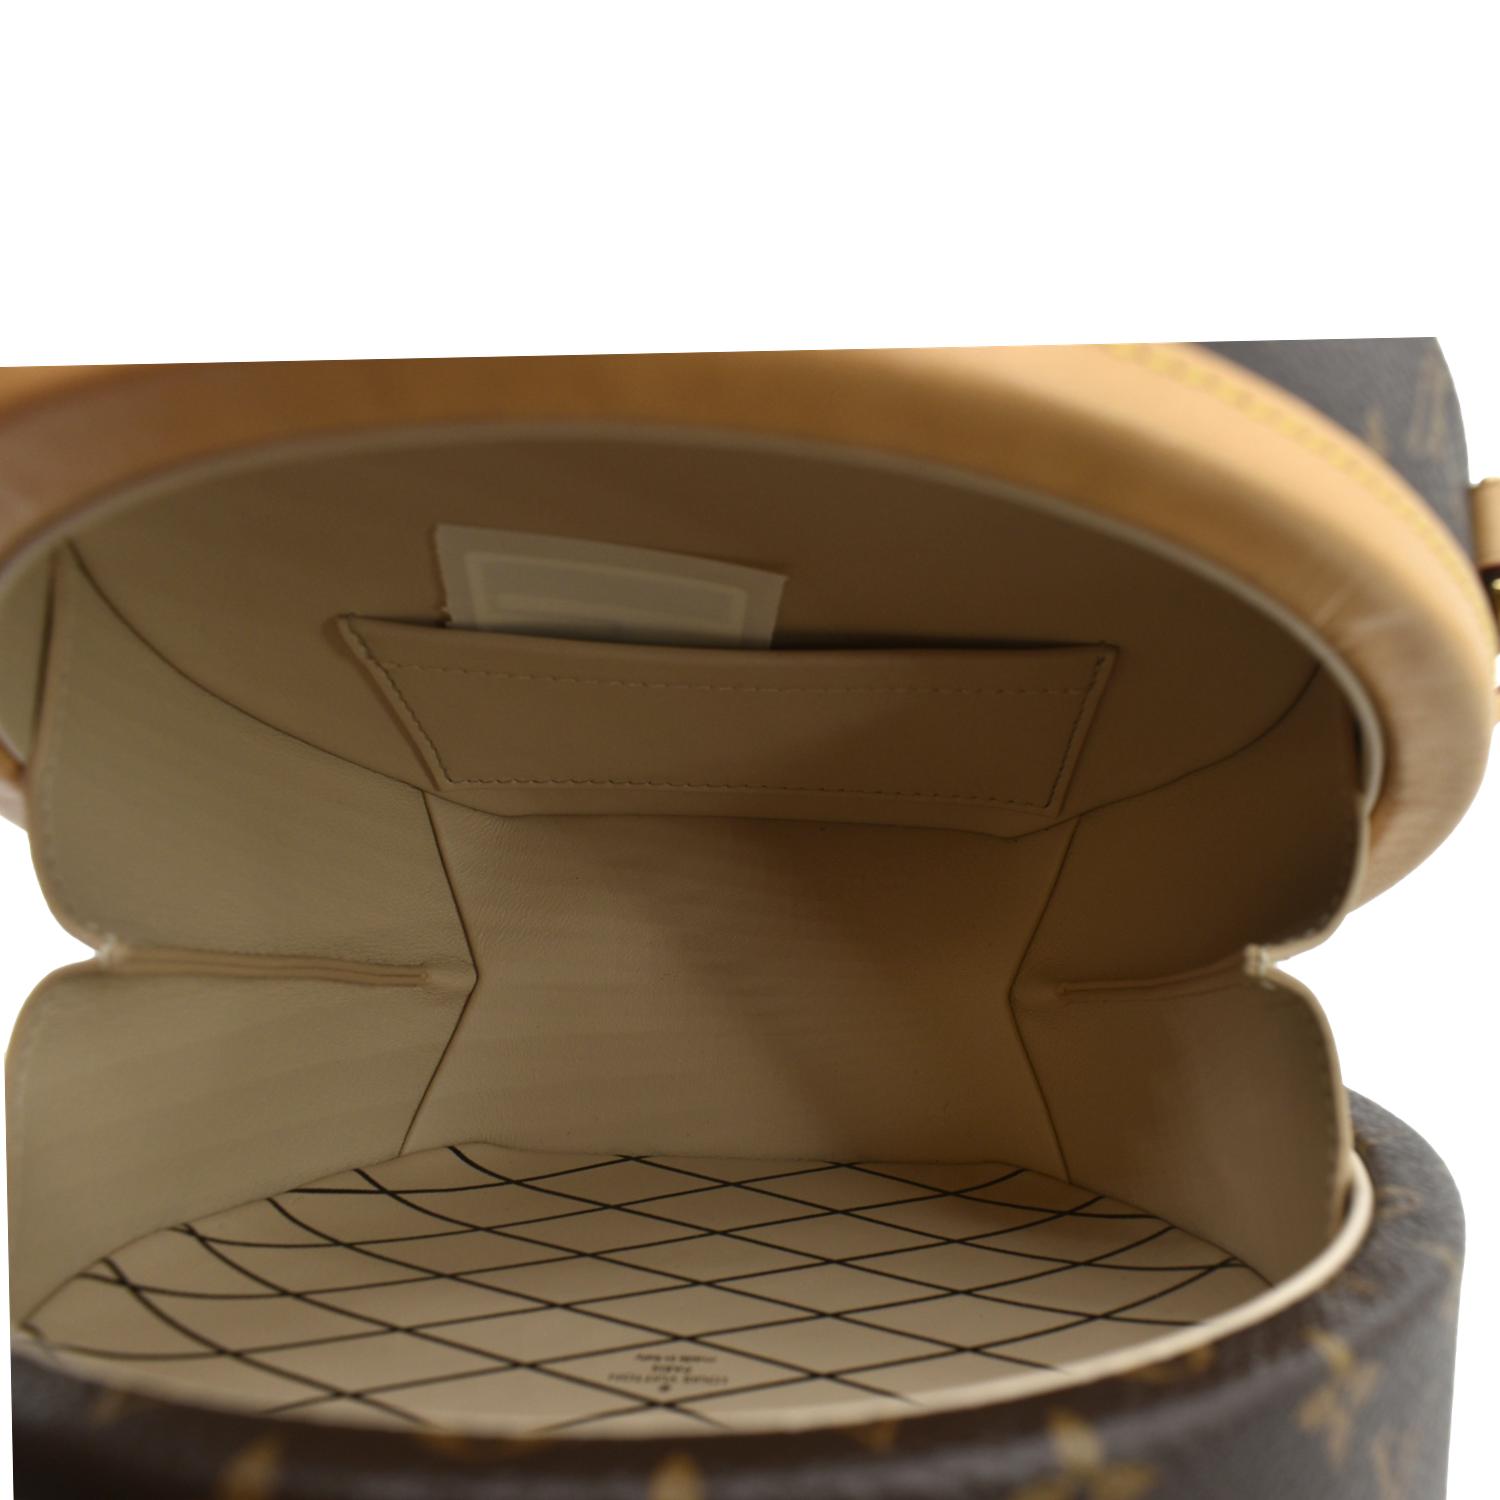 Petite boîte chapeau cloth crossbody bag Louis Vuitton Brown in Cloth -  29923642